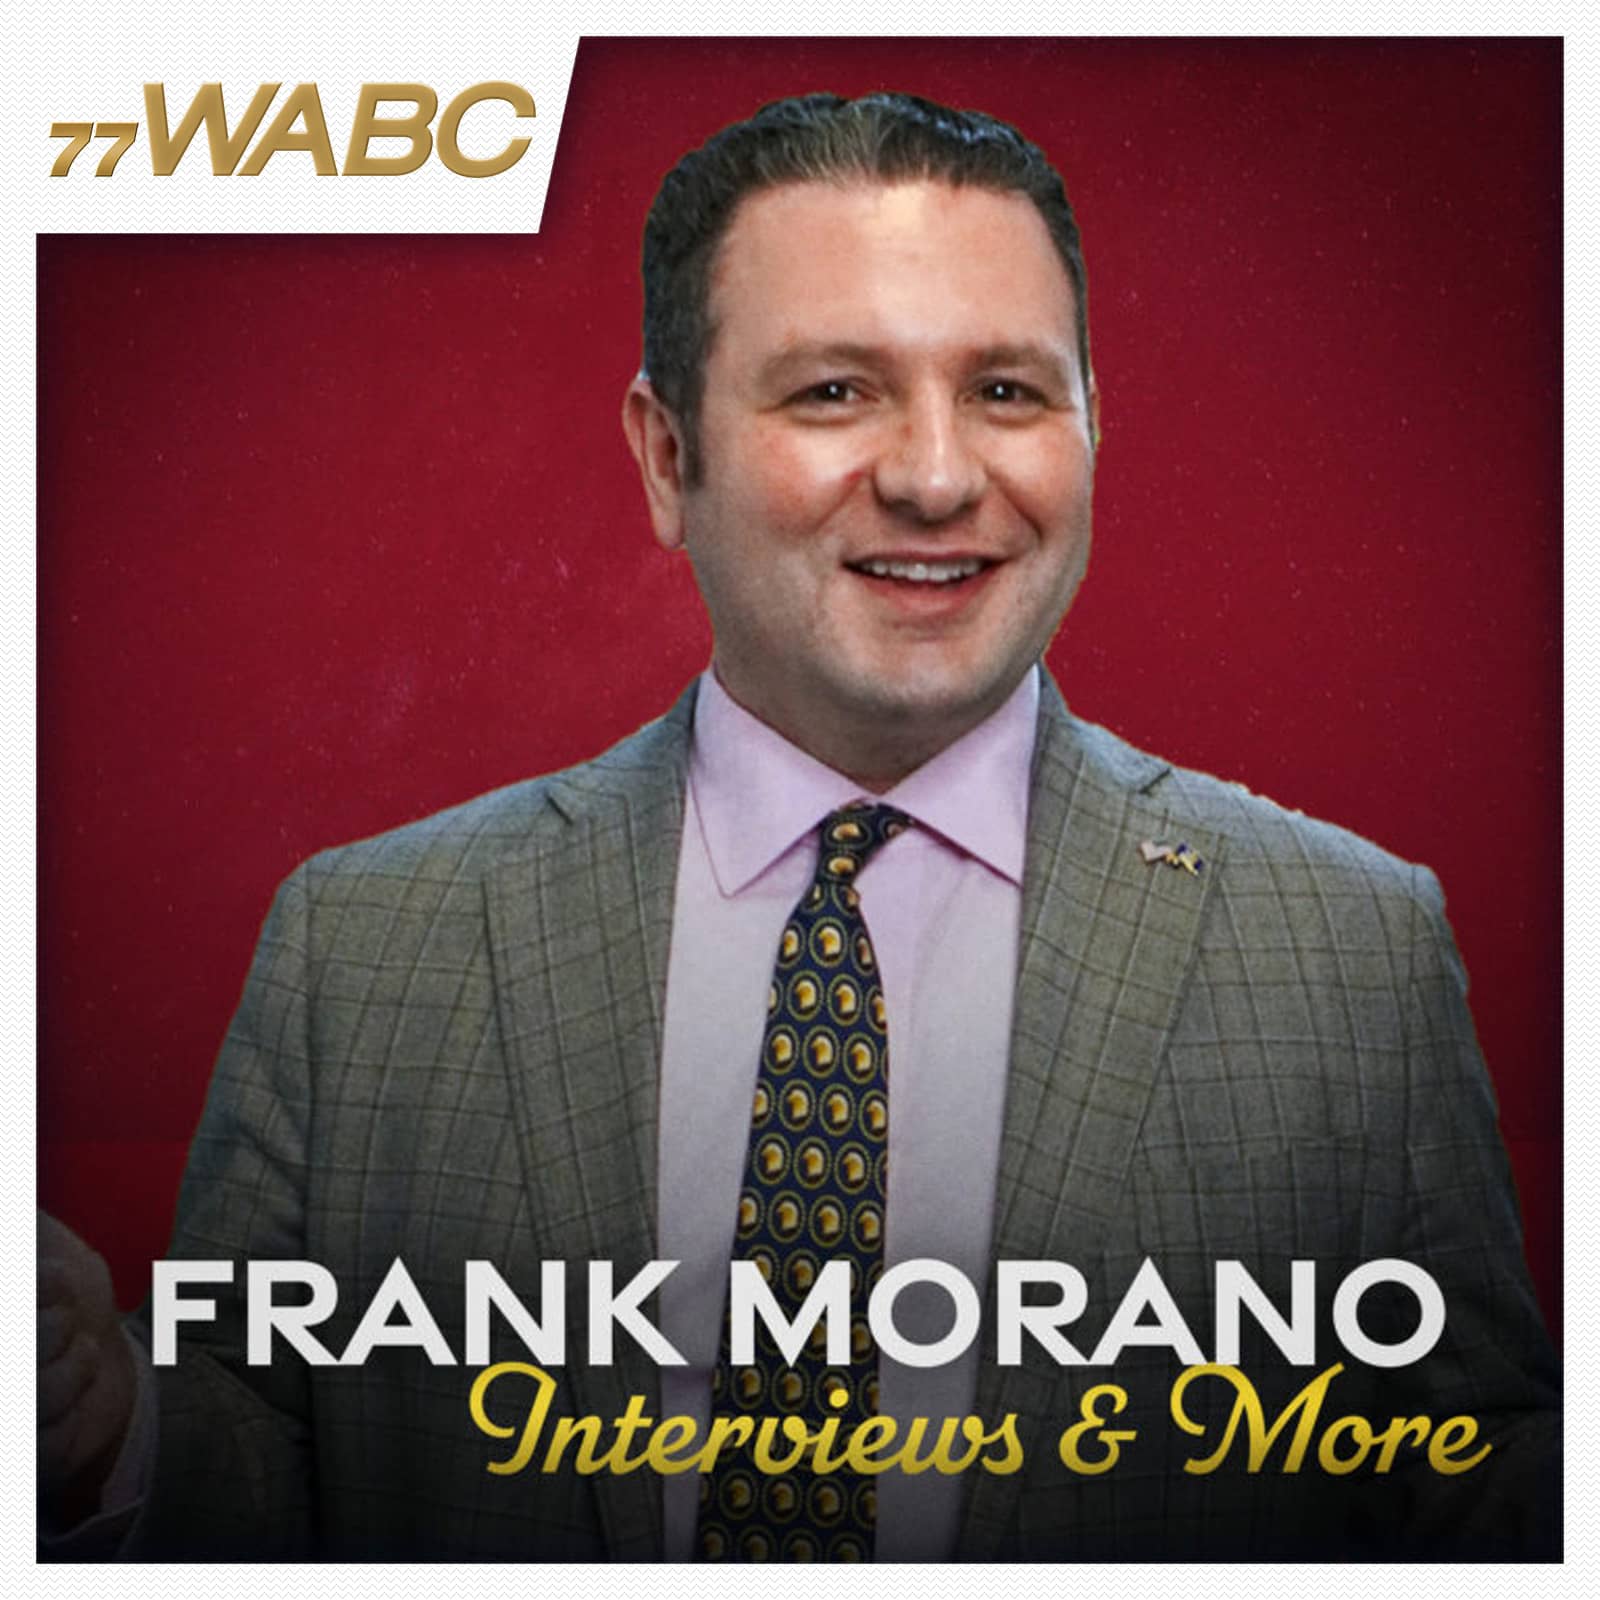 frank-morano-interviews-and-more-podcast-new-logo983666